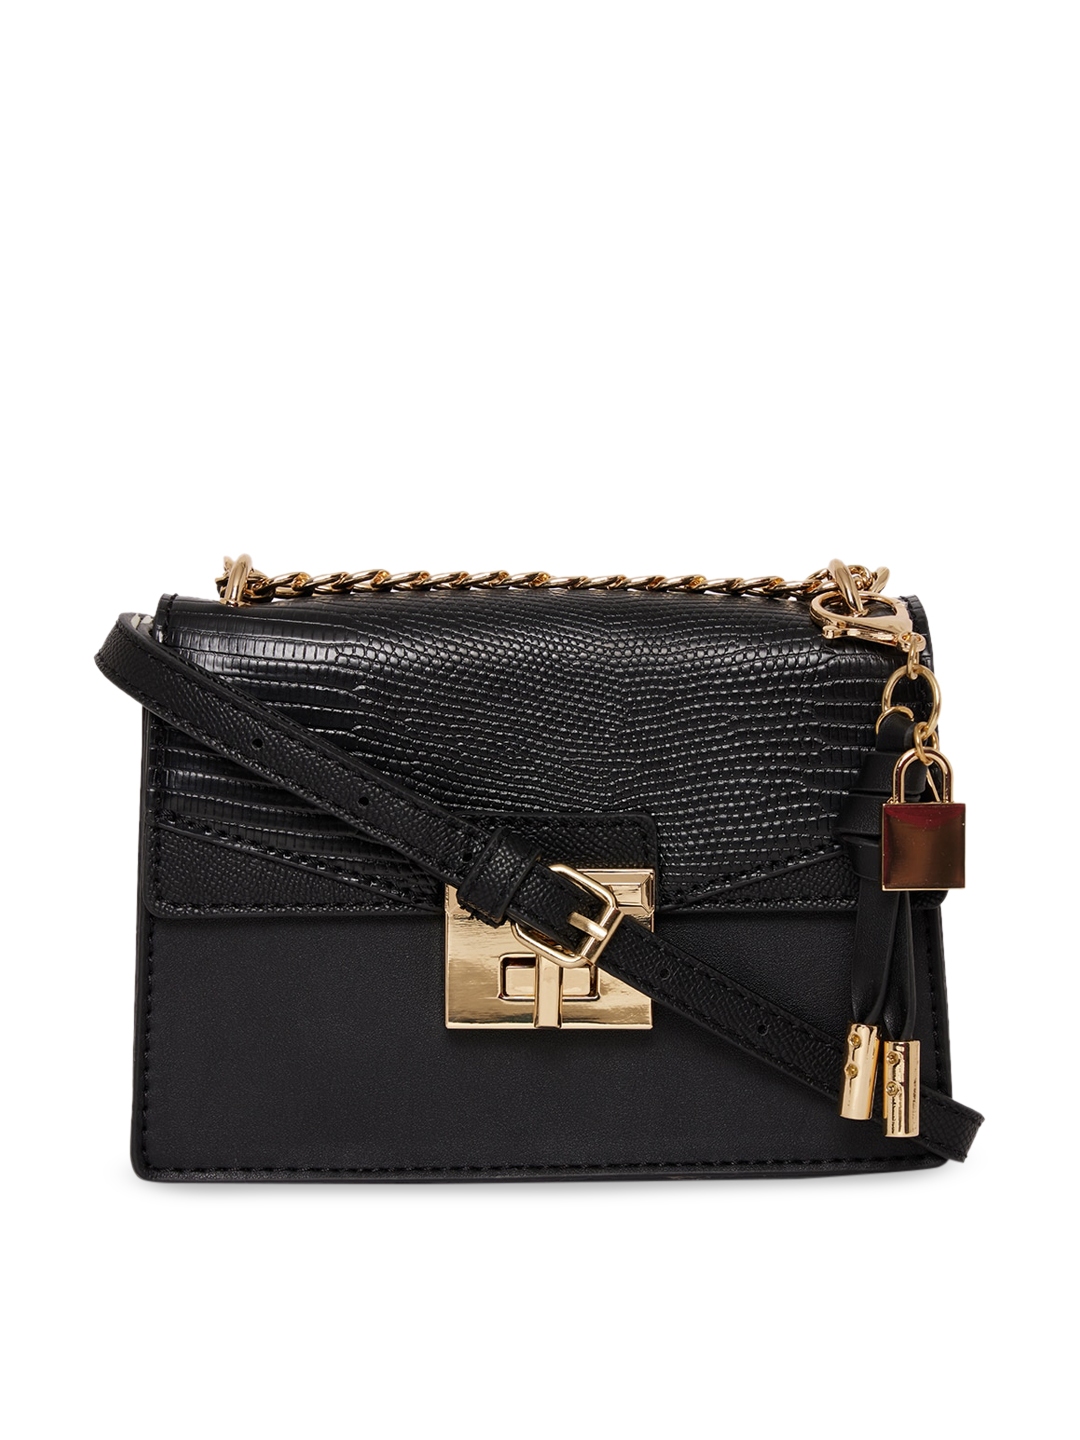 Buy ALDO Black Textured Structured Sling Bag - Handbags for Women ...